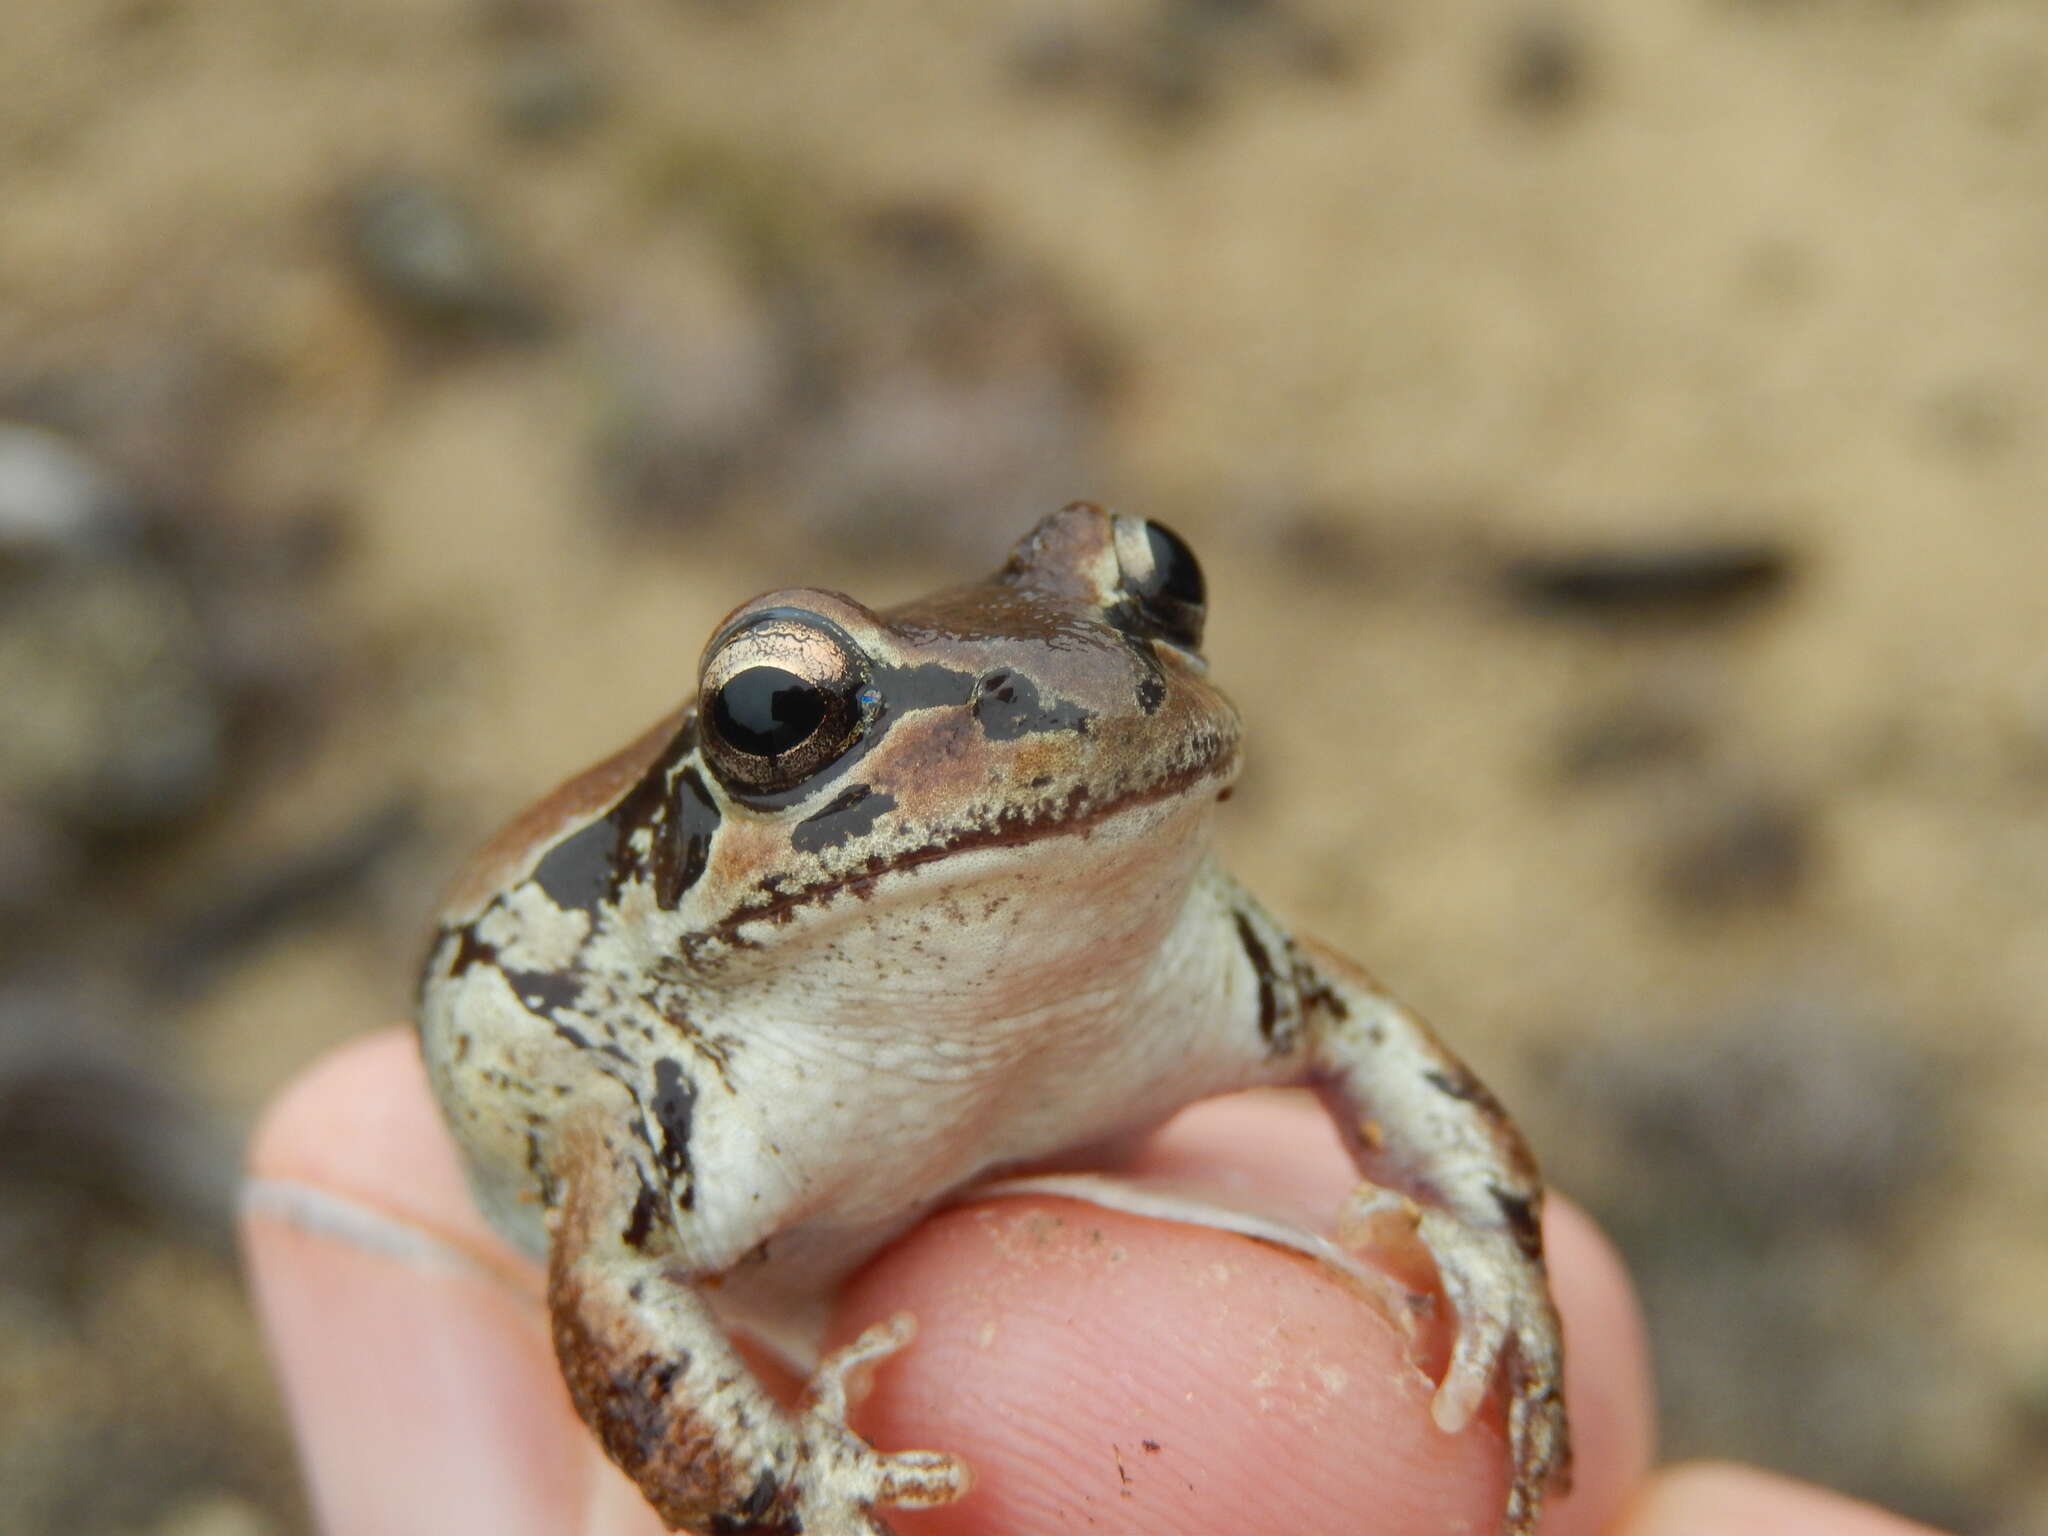 Image of Strecker's Chorus Frog